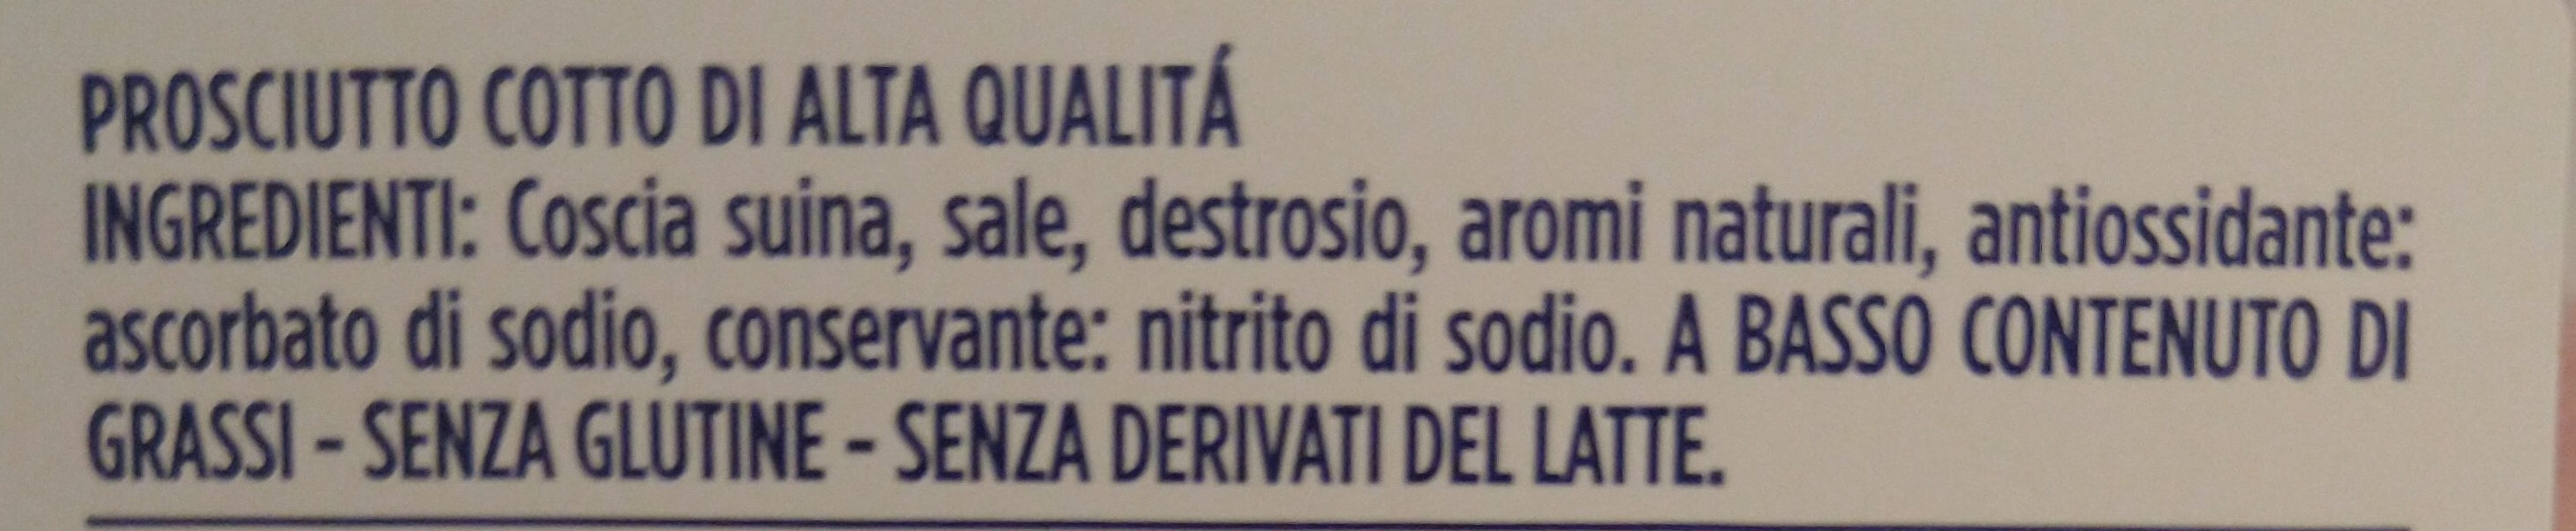 prosciutto cotto - Ingredients - it